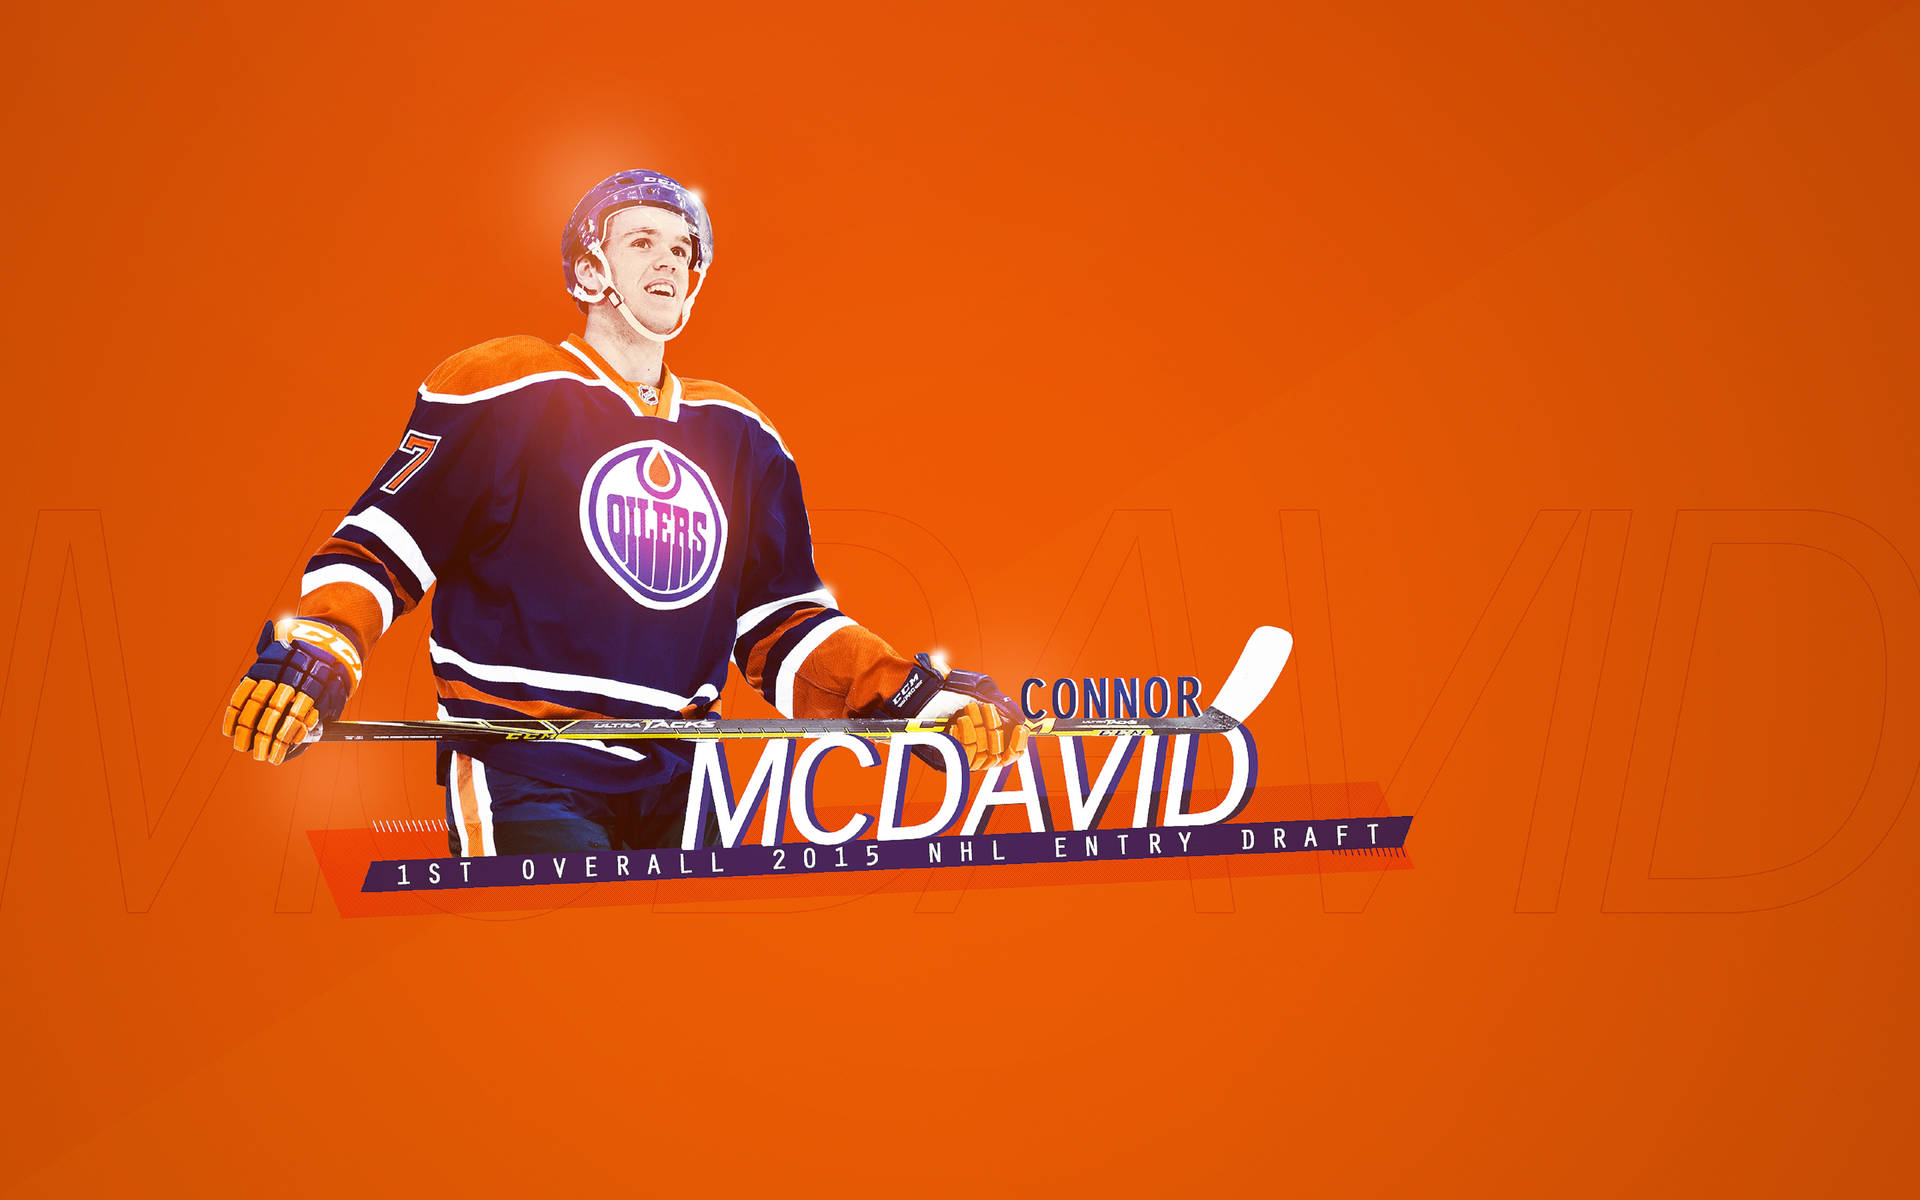 Edmonton Oilers Mcdavid 2015 Draft Background